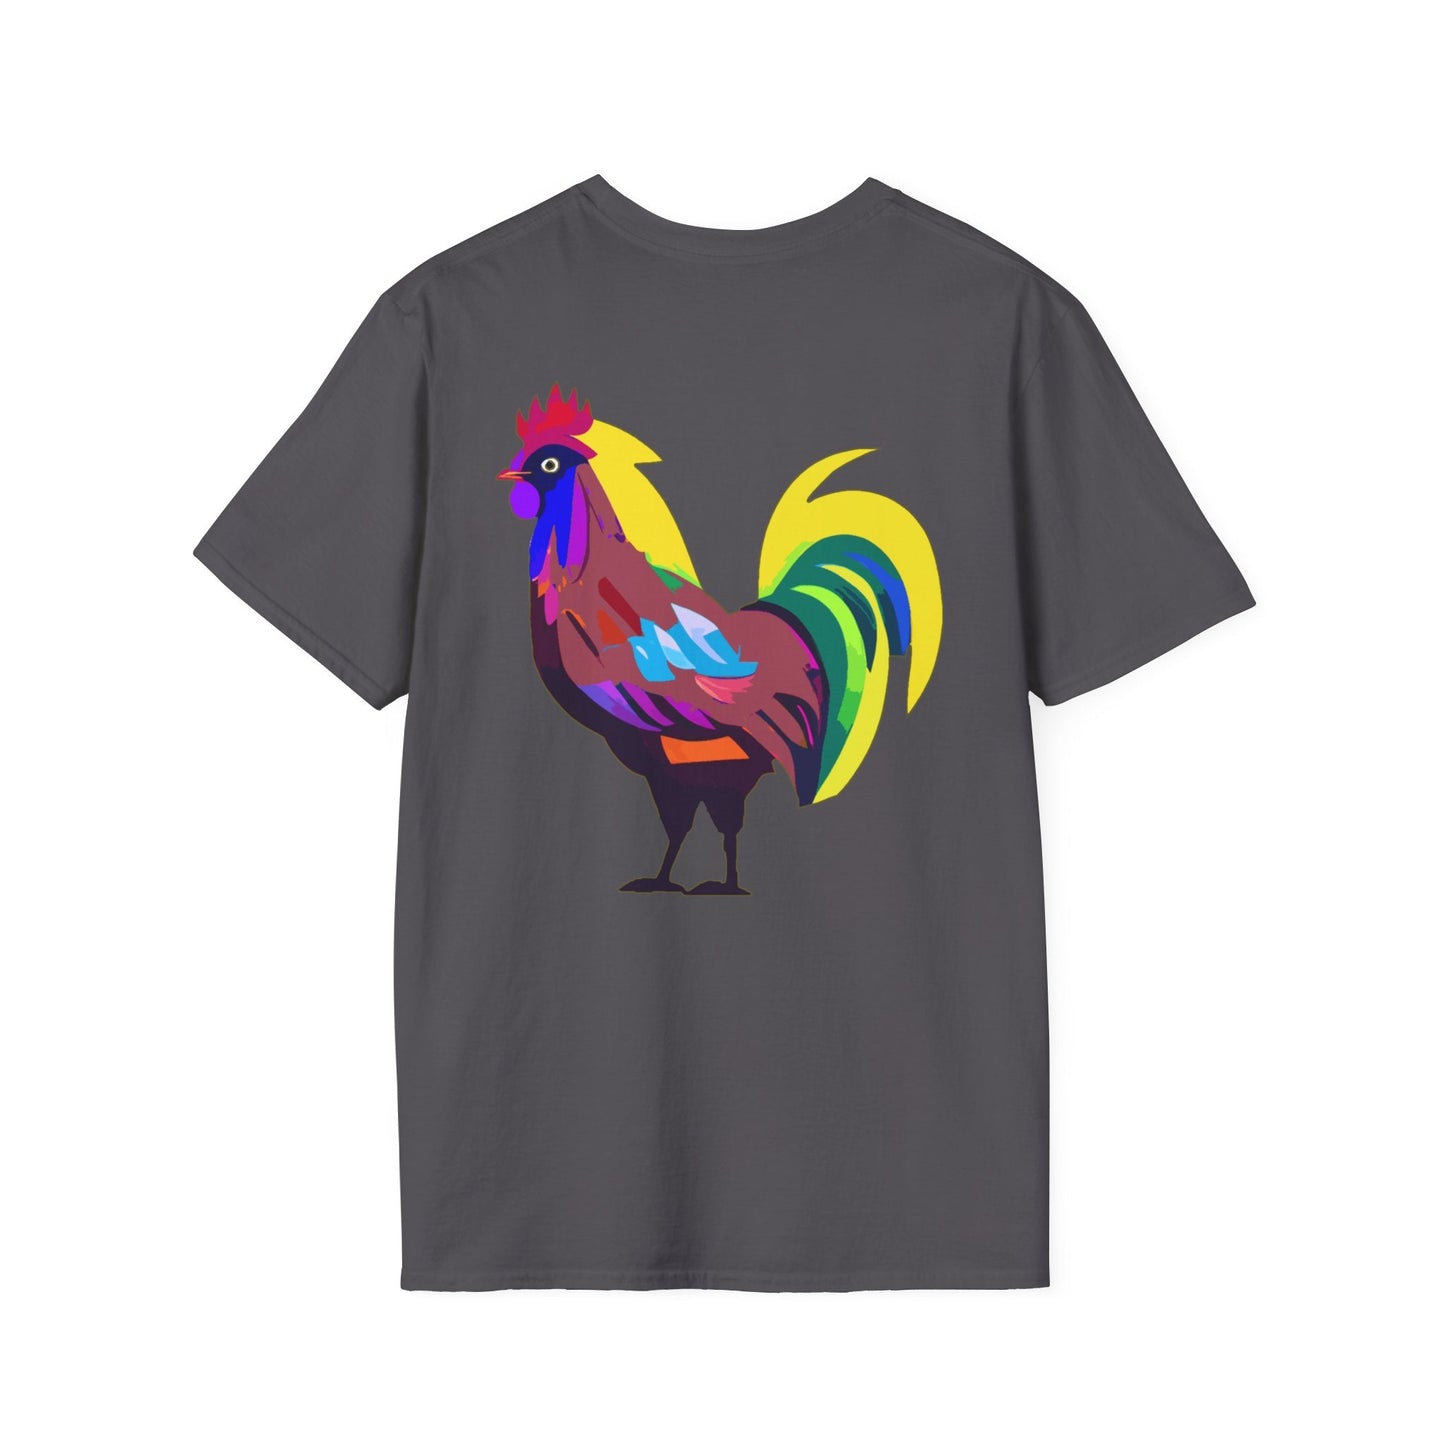 COCKY Outfique T-Shirt | Outfique | T-Shirt | Crew neck